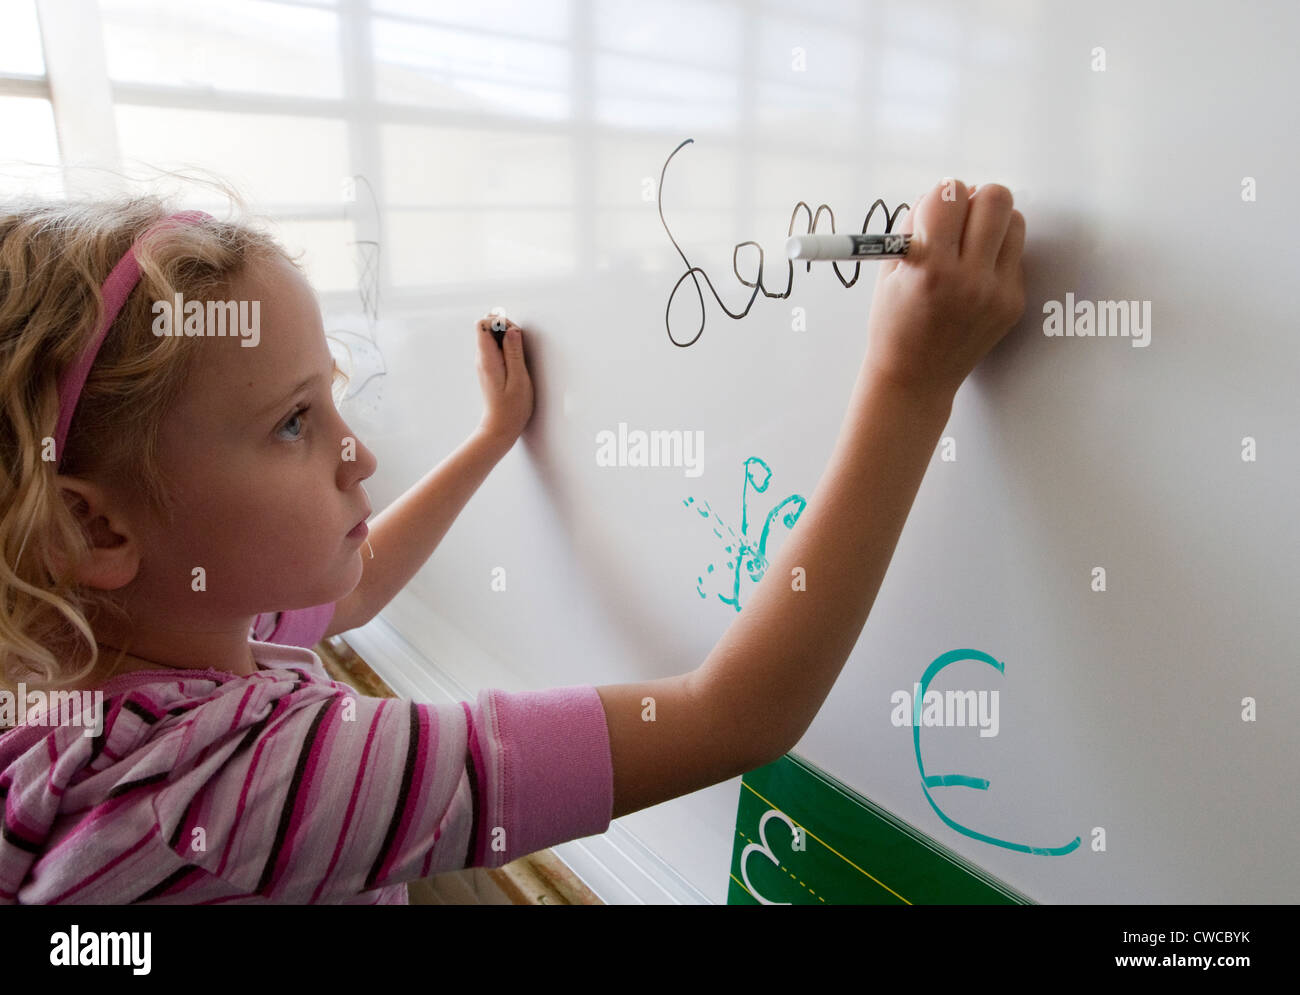 child writing on whiteboard